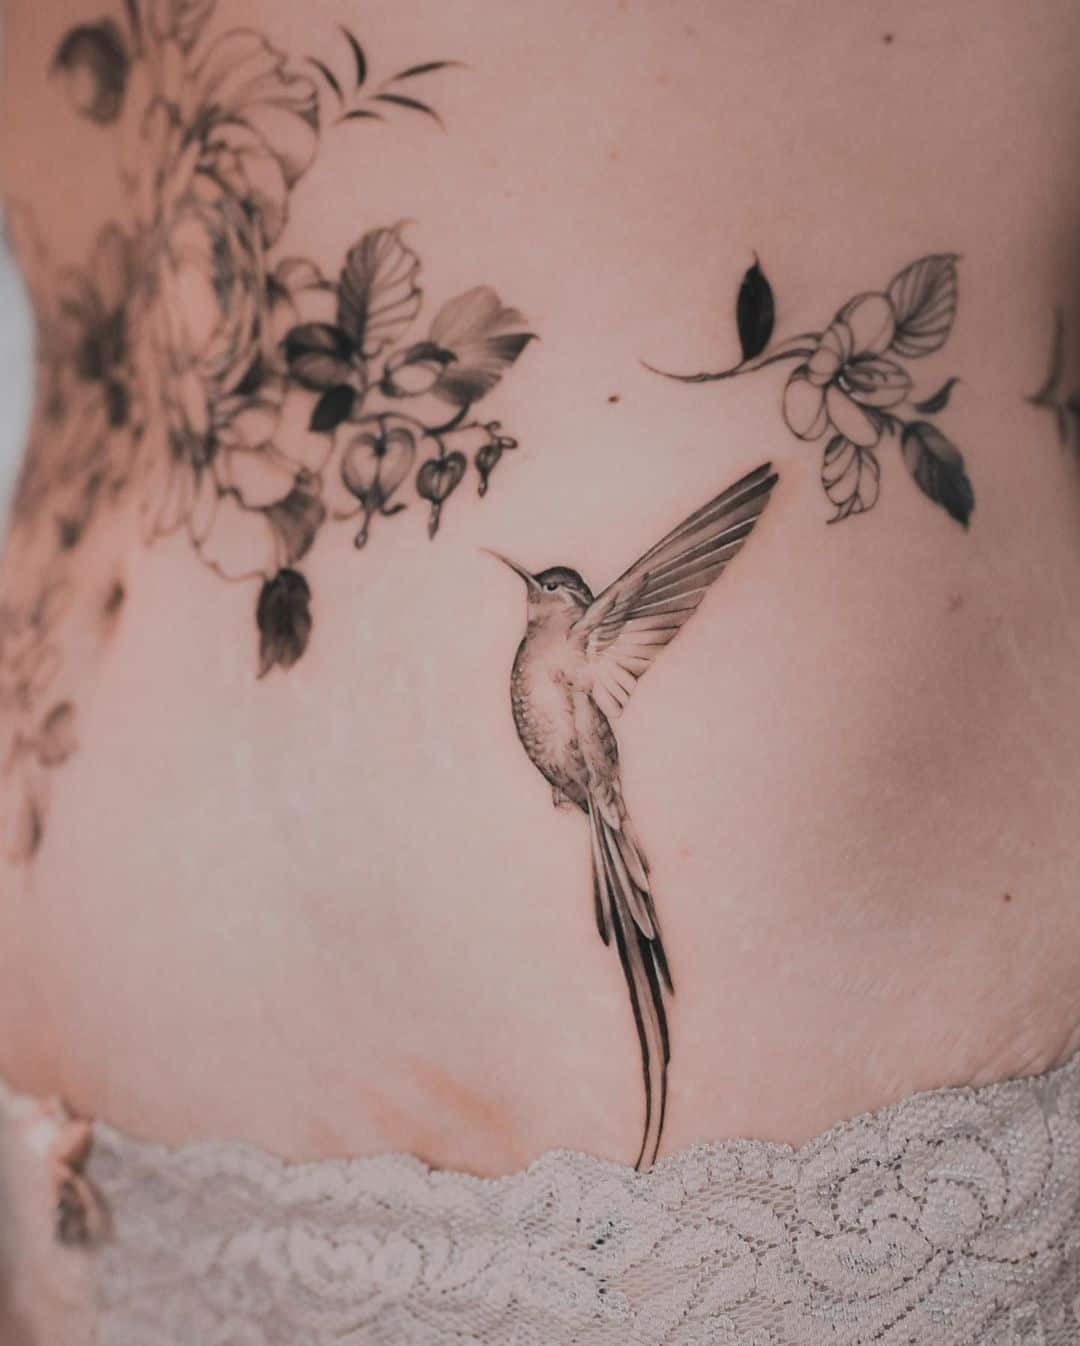 HUmming bird with flowers by karolinaszymanska tattoo